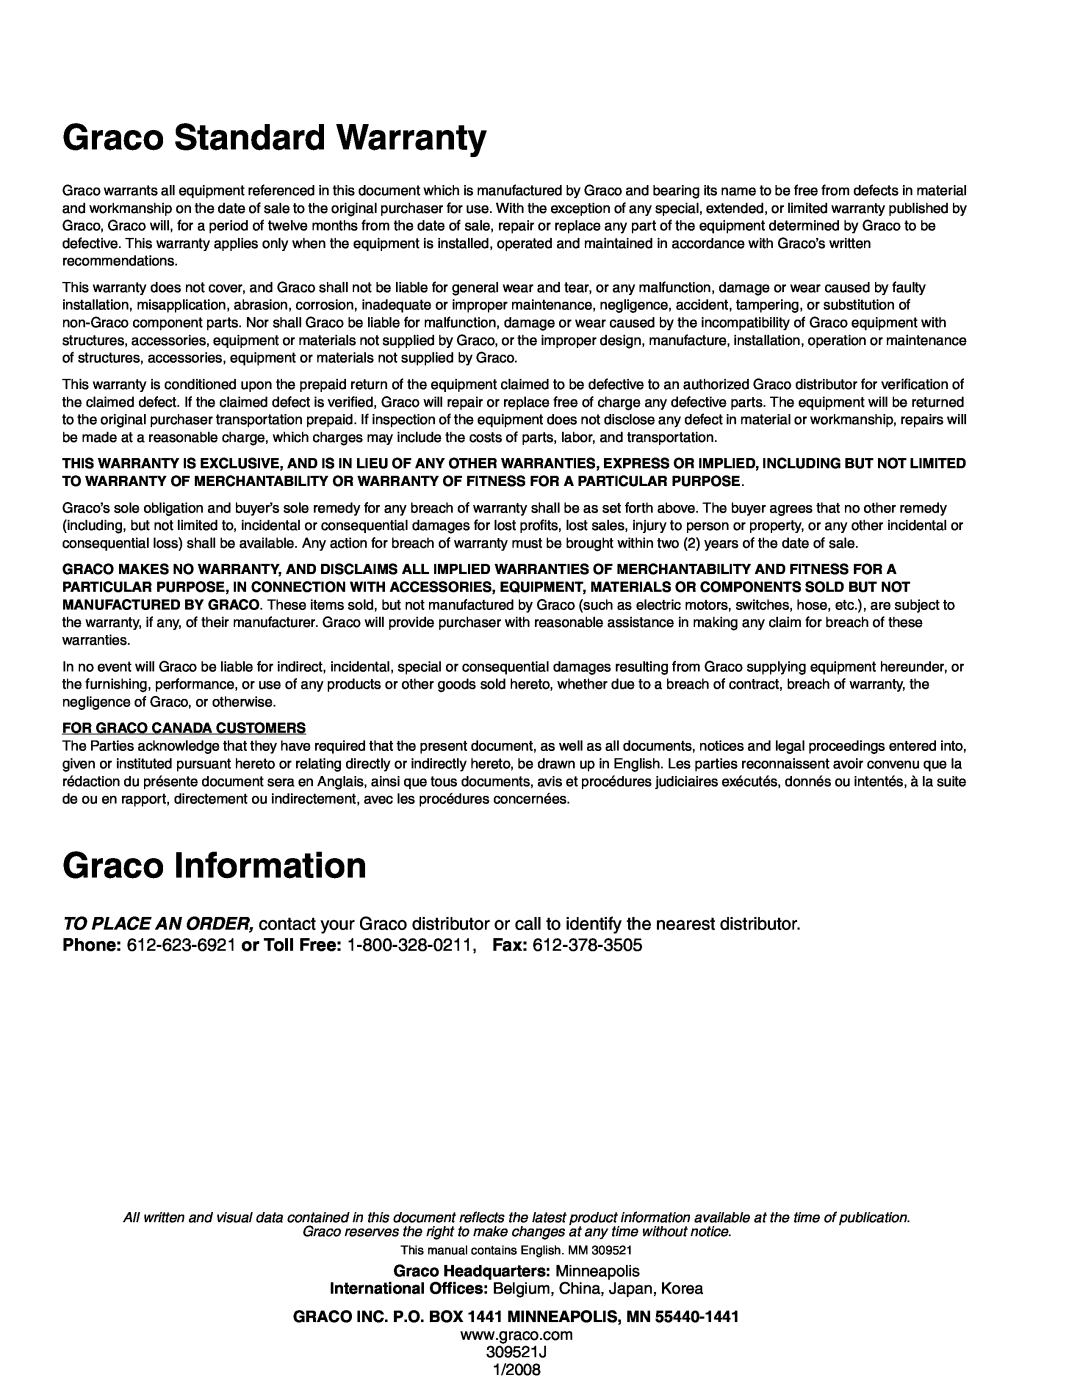 Hitachi 309521J important safety instructions Graco Standard Warranty, Graco Information, Graco Headquarters Minneapolis 